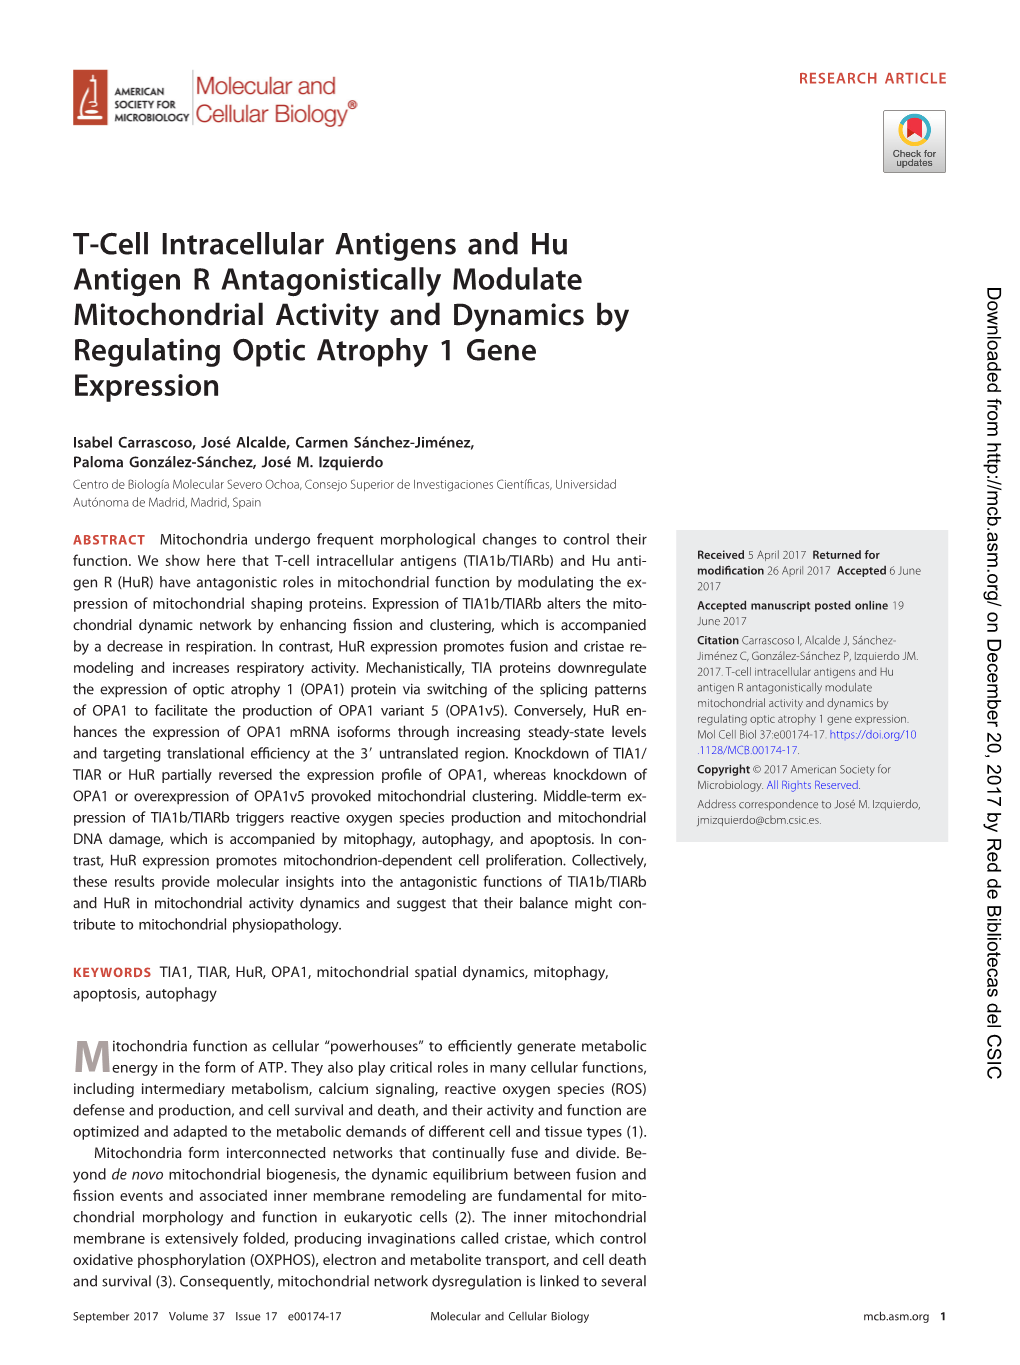 T-Cell Intracellular Antigens and Hu Antigen R Antagonistically